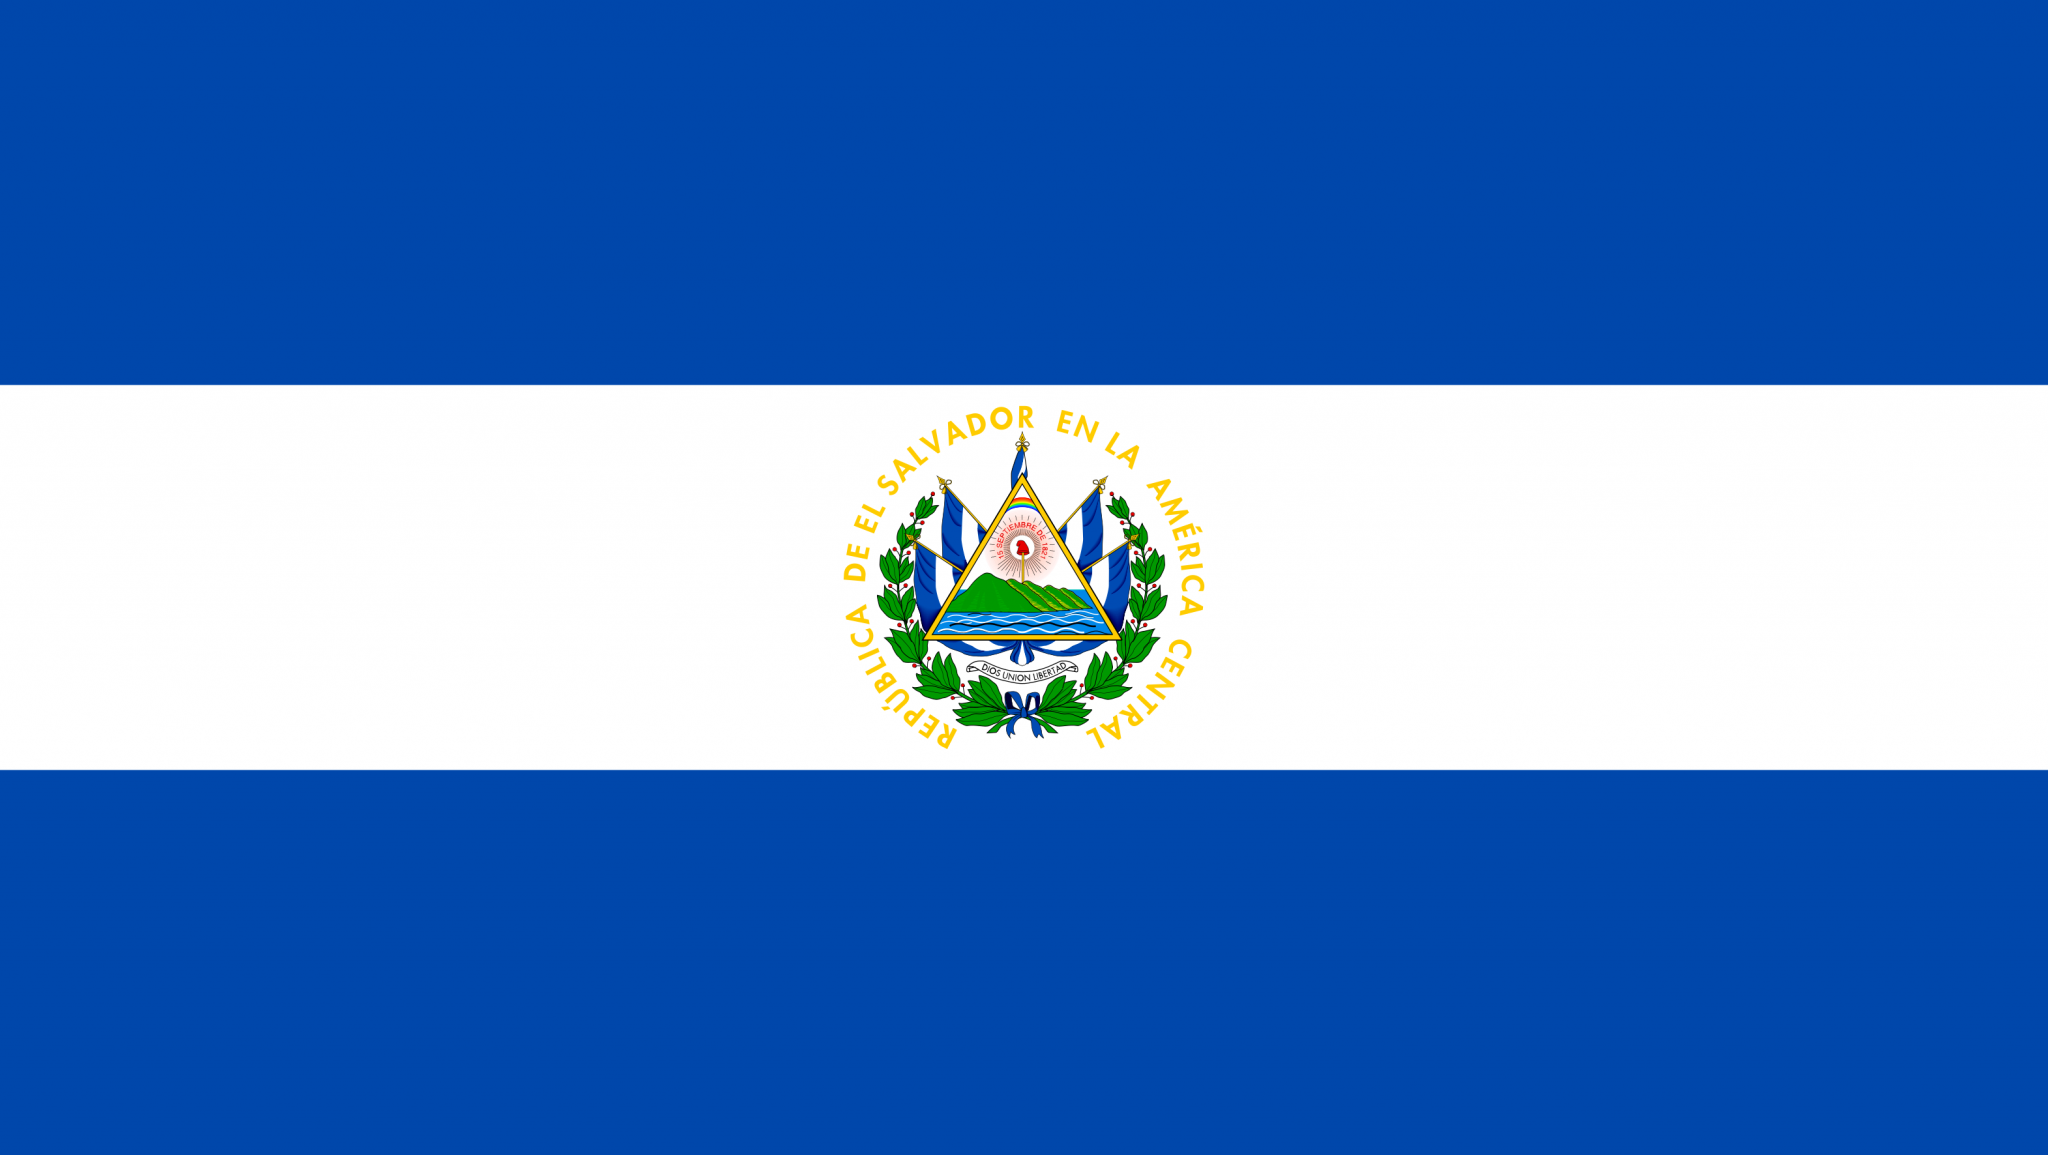 Free El Salvador Flag Documents: PDF, DOC, DOCX, HTML & More! 